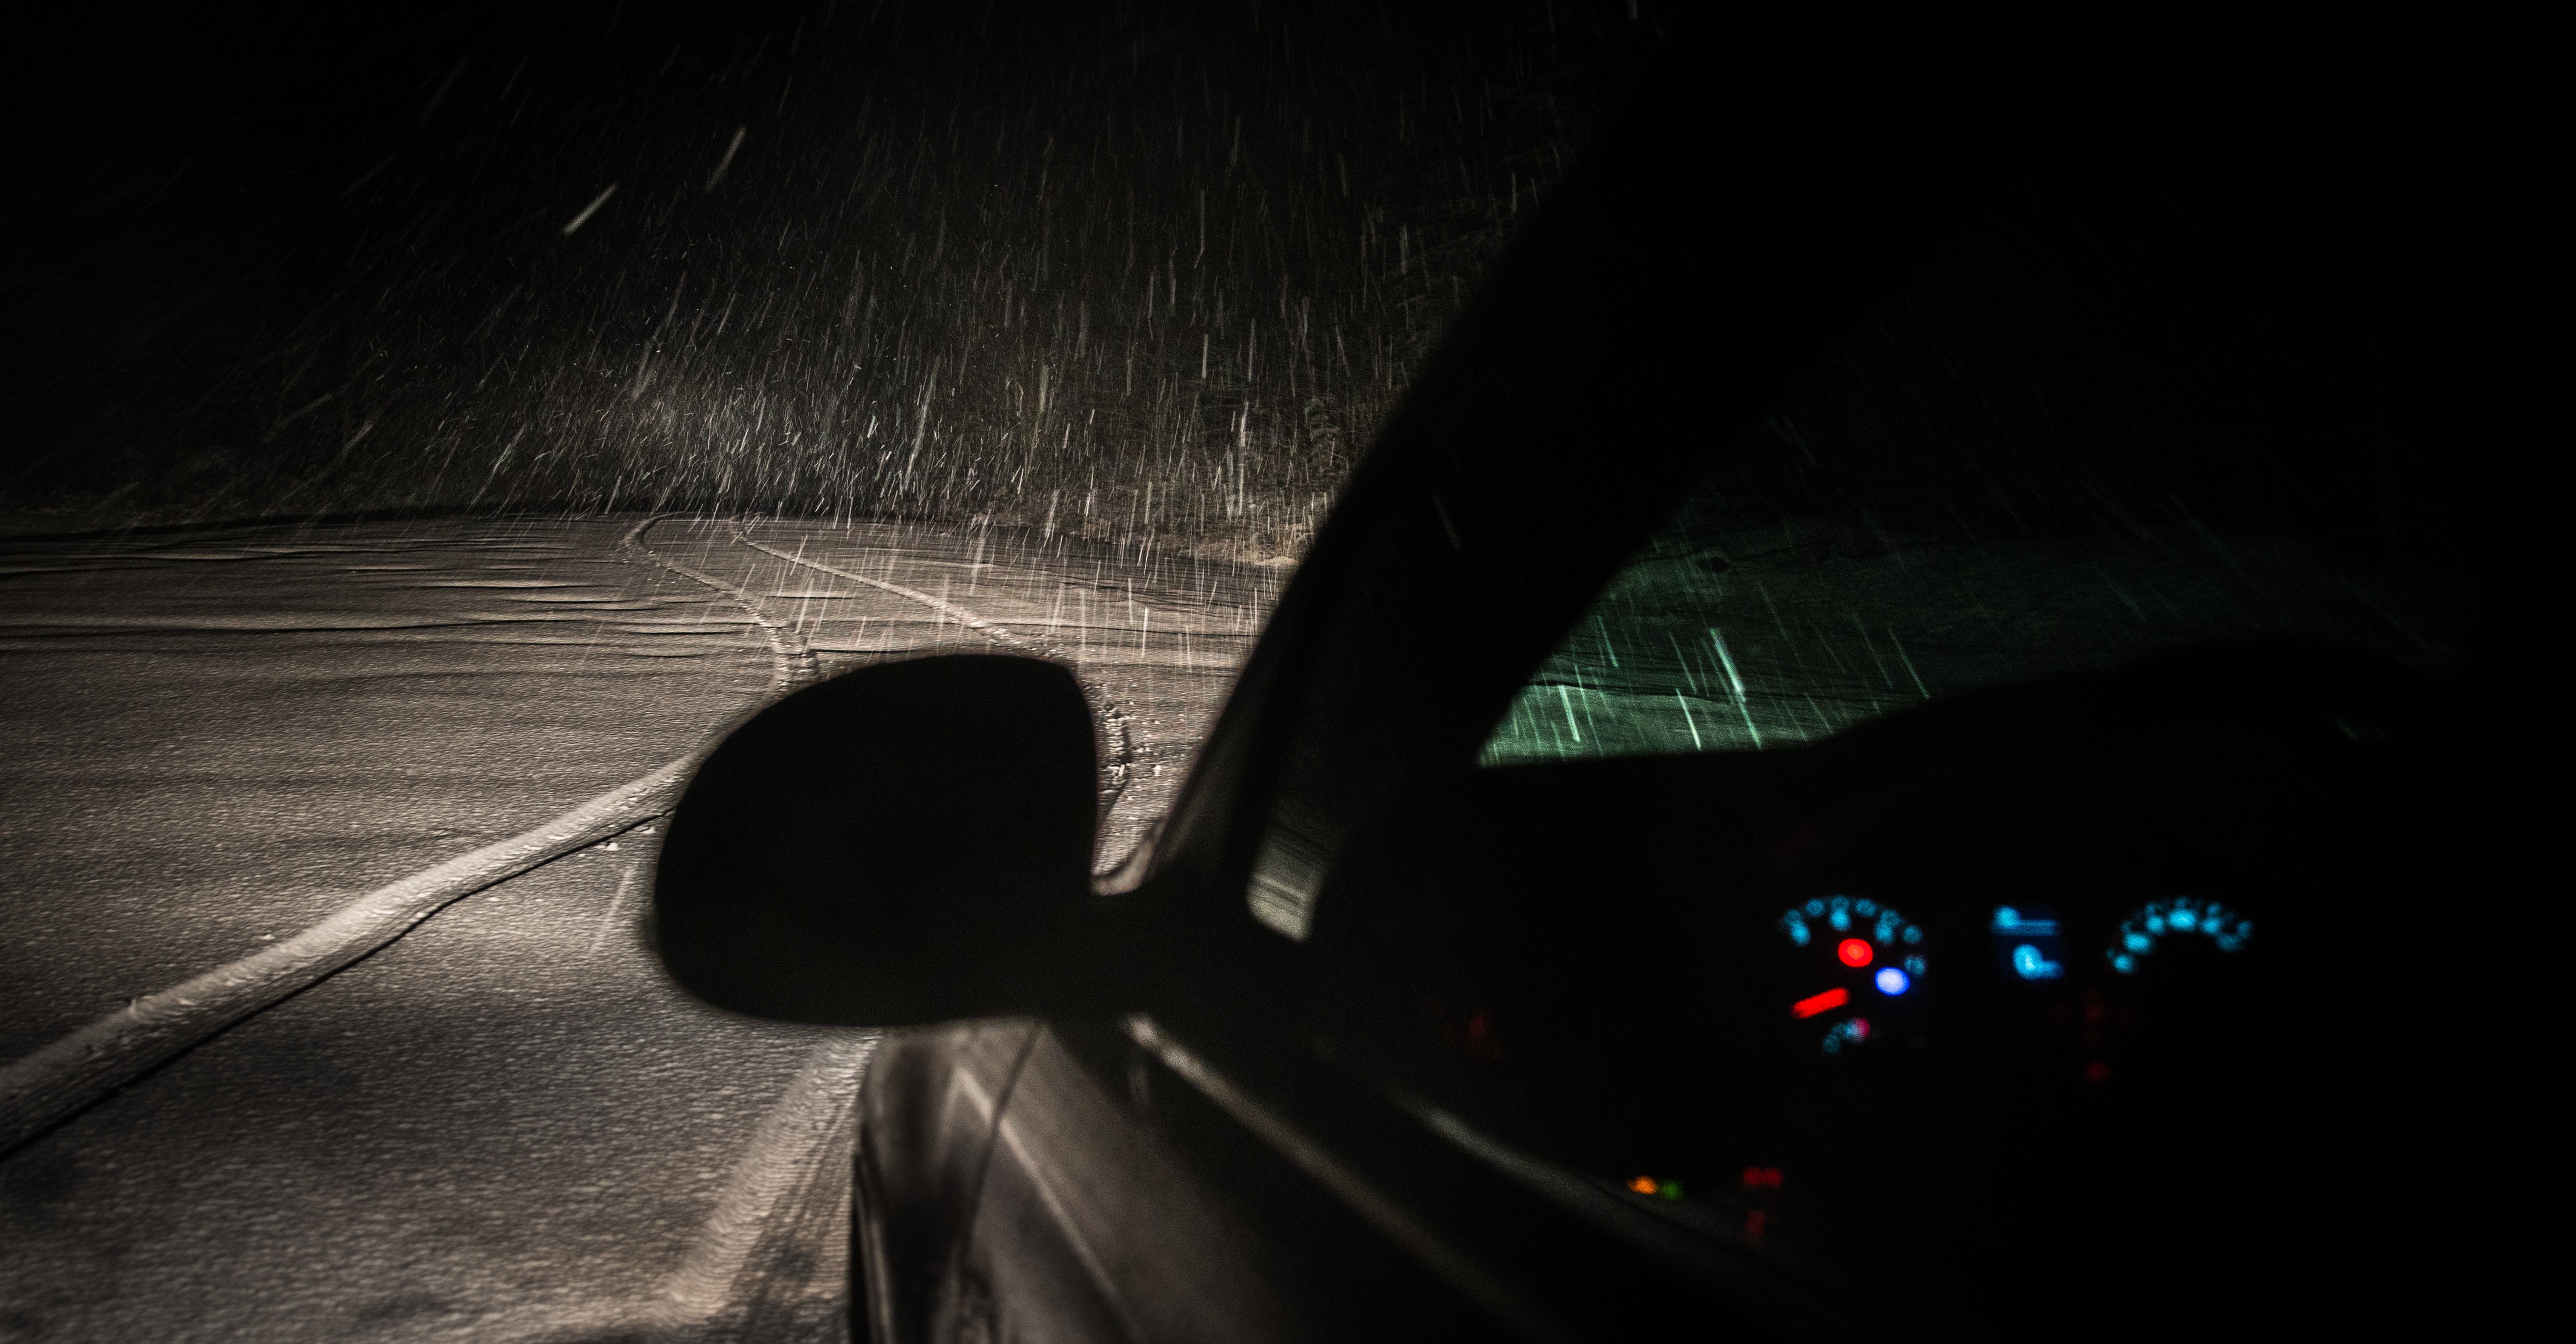 Black car on roadway while raining during nighttime photo